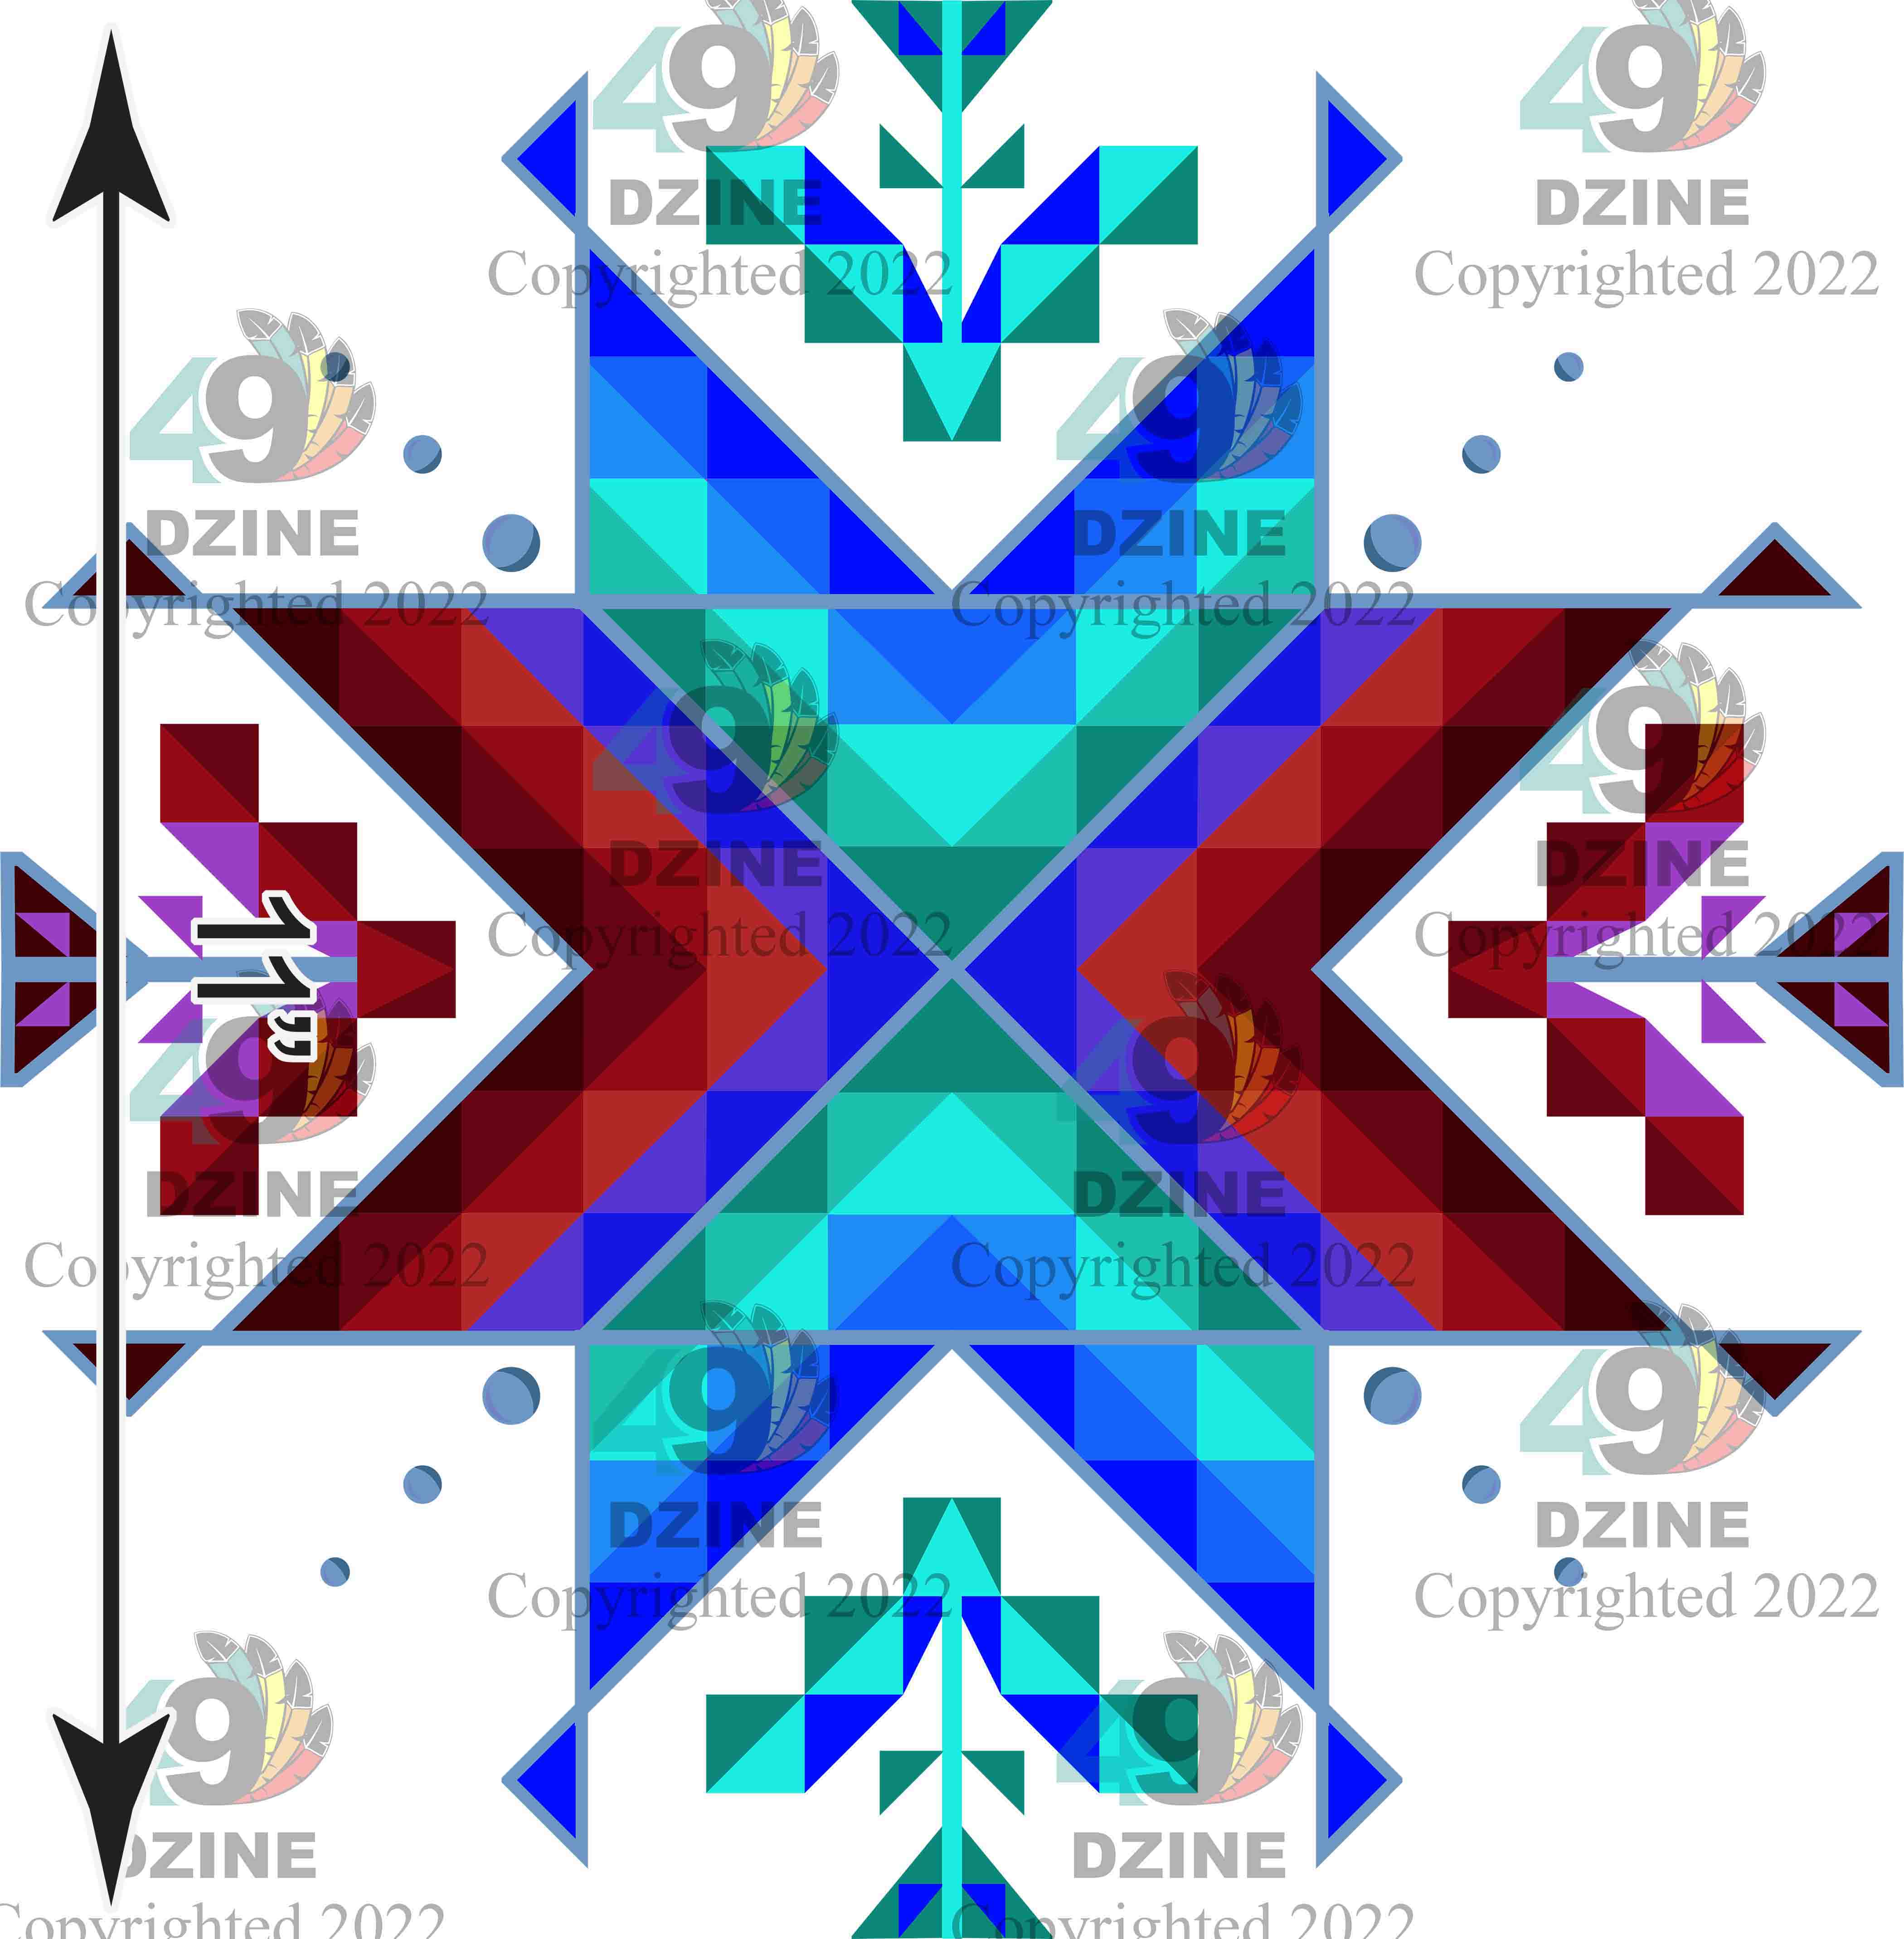 11-inch Geometric Transfer Dream of the Ancestors Transfers 49 Dzine 